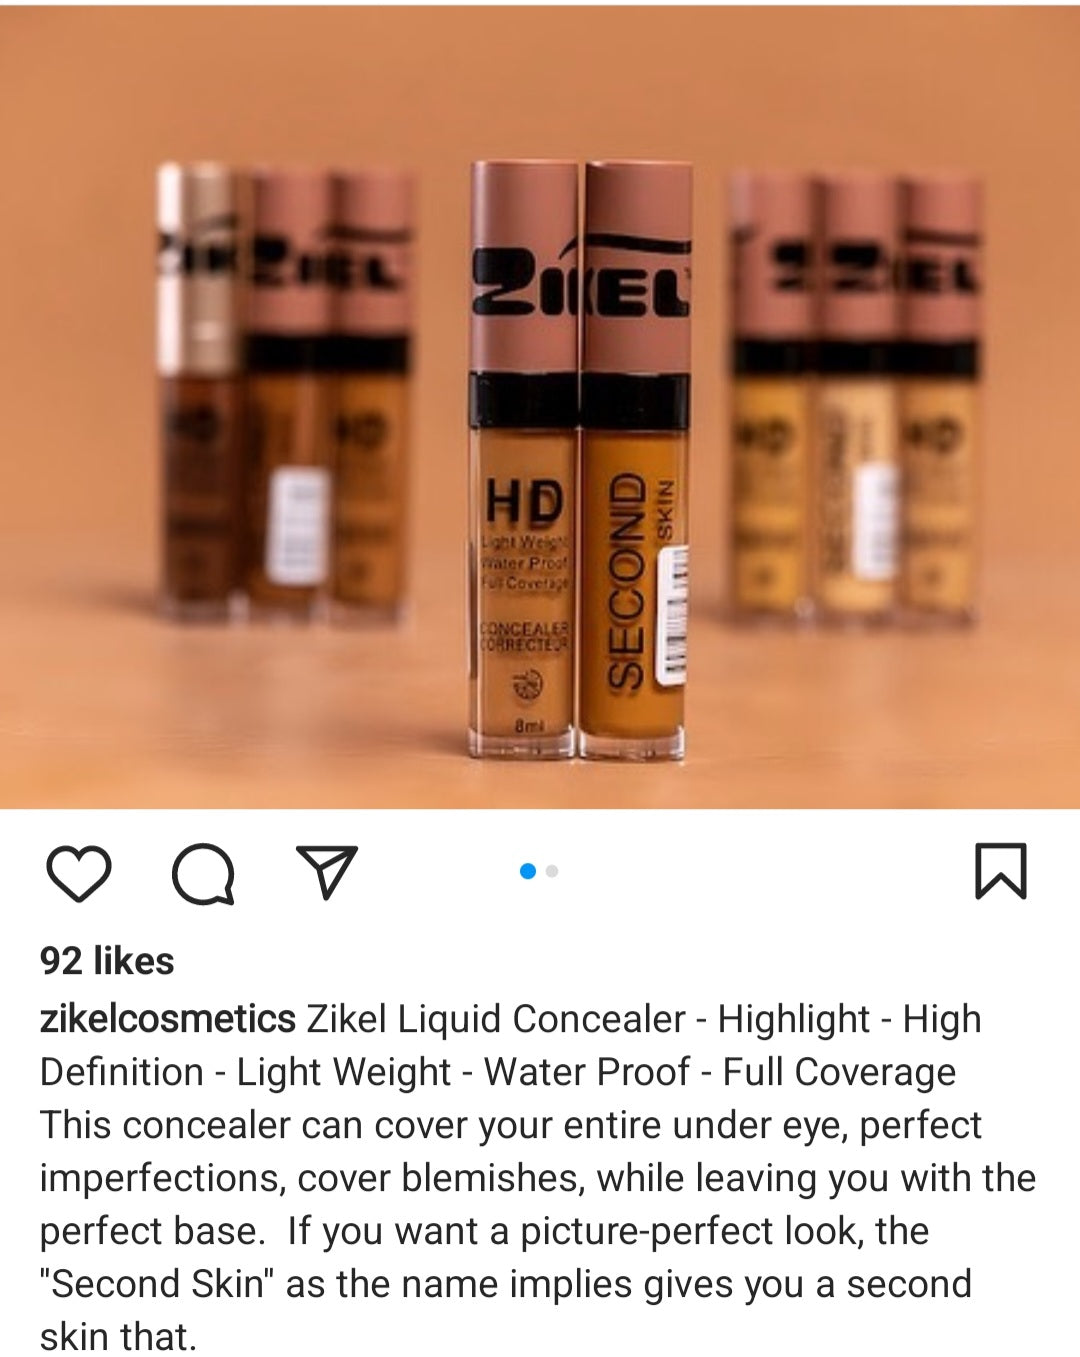 ZIKEL HD Second Skin Light Weight Waterproof Concealer~Correttore HD impermeabile leggero 8ml - SANDY'S MAKEUP AND ARTISTRY 